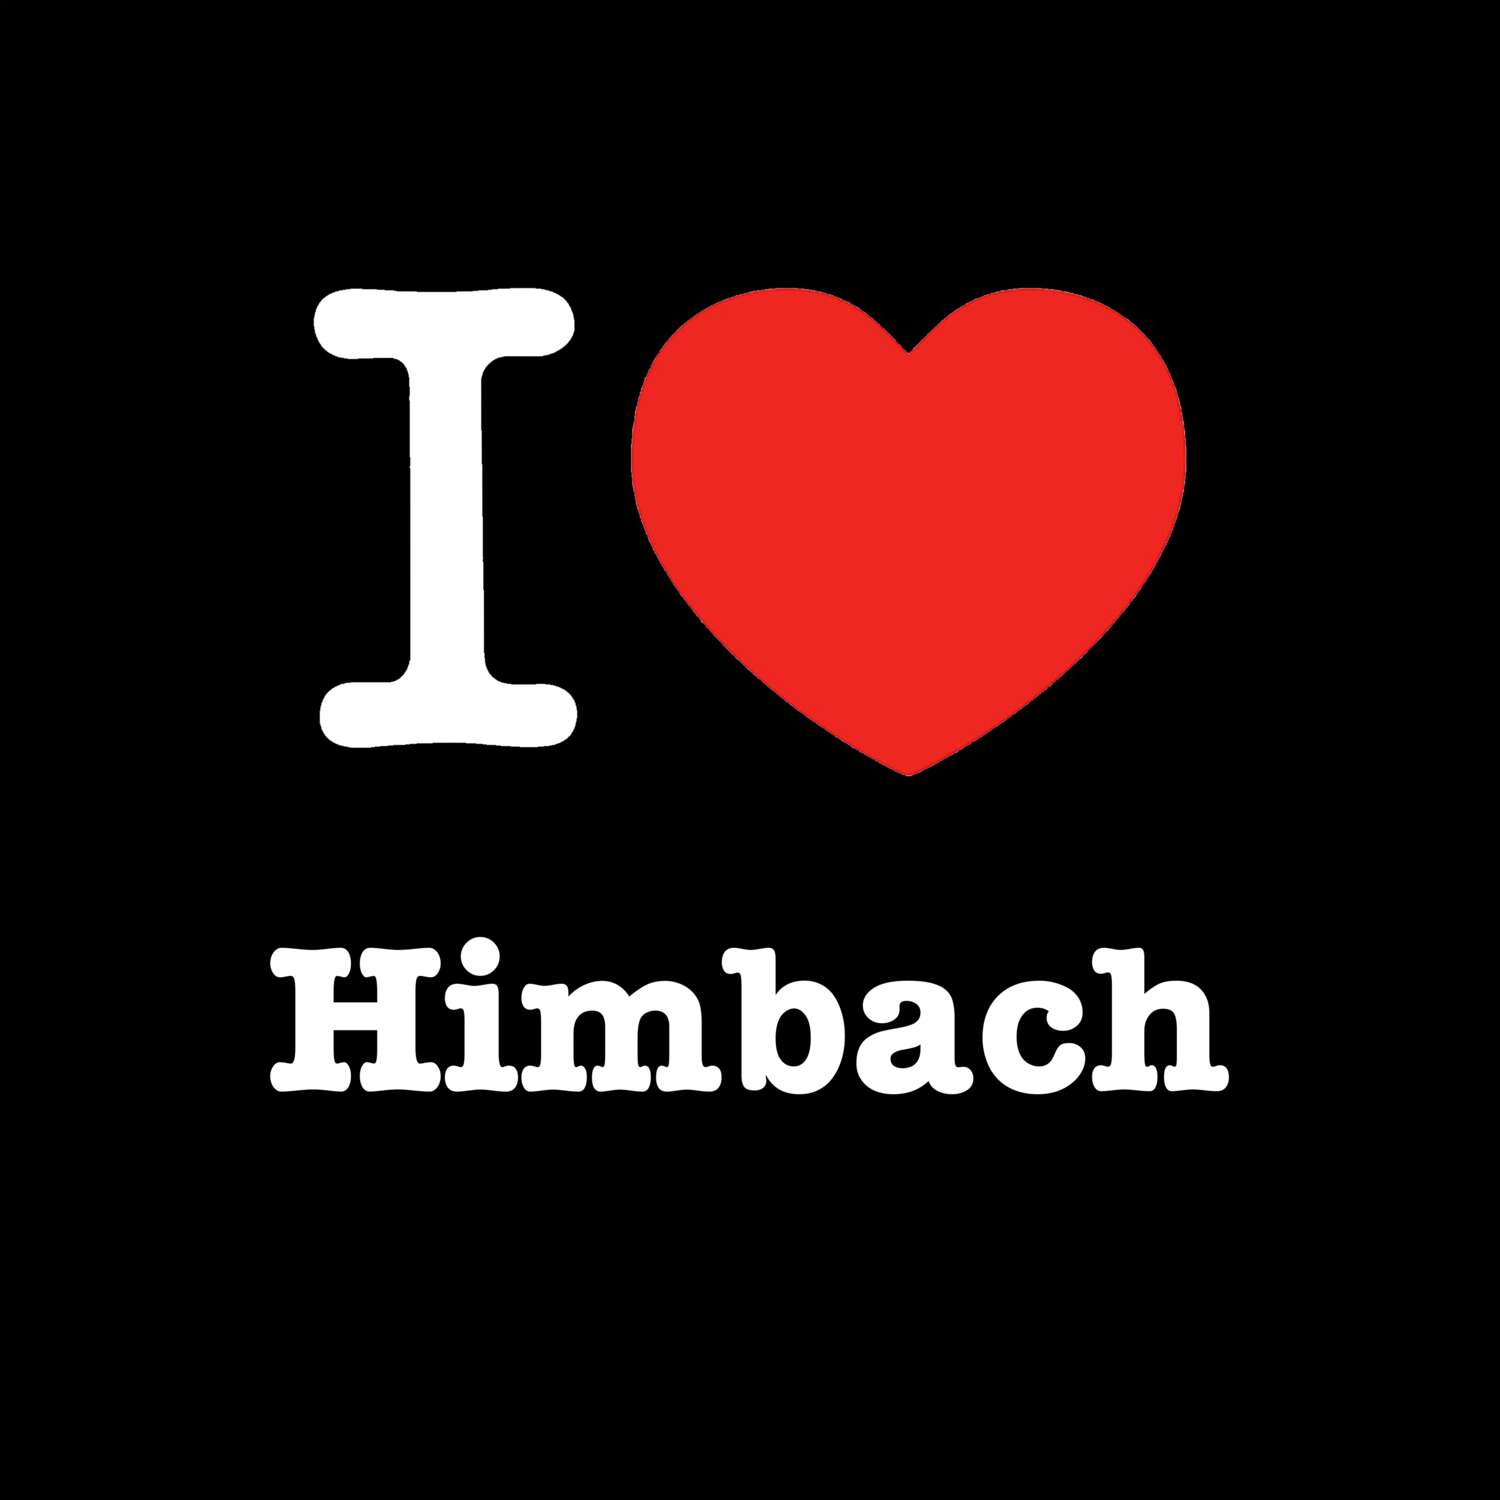 Himbach T-Shirt »I love«